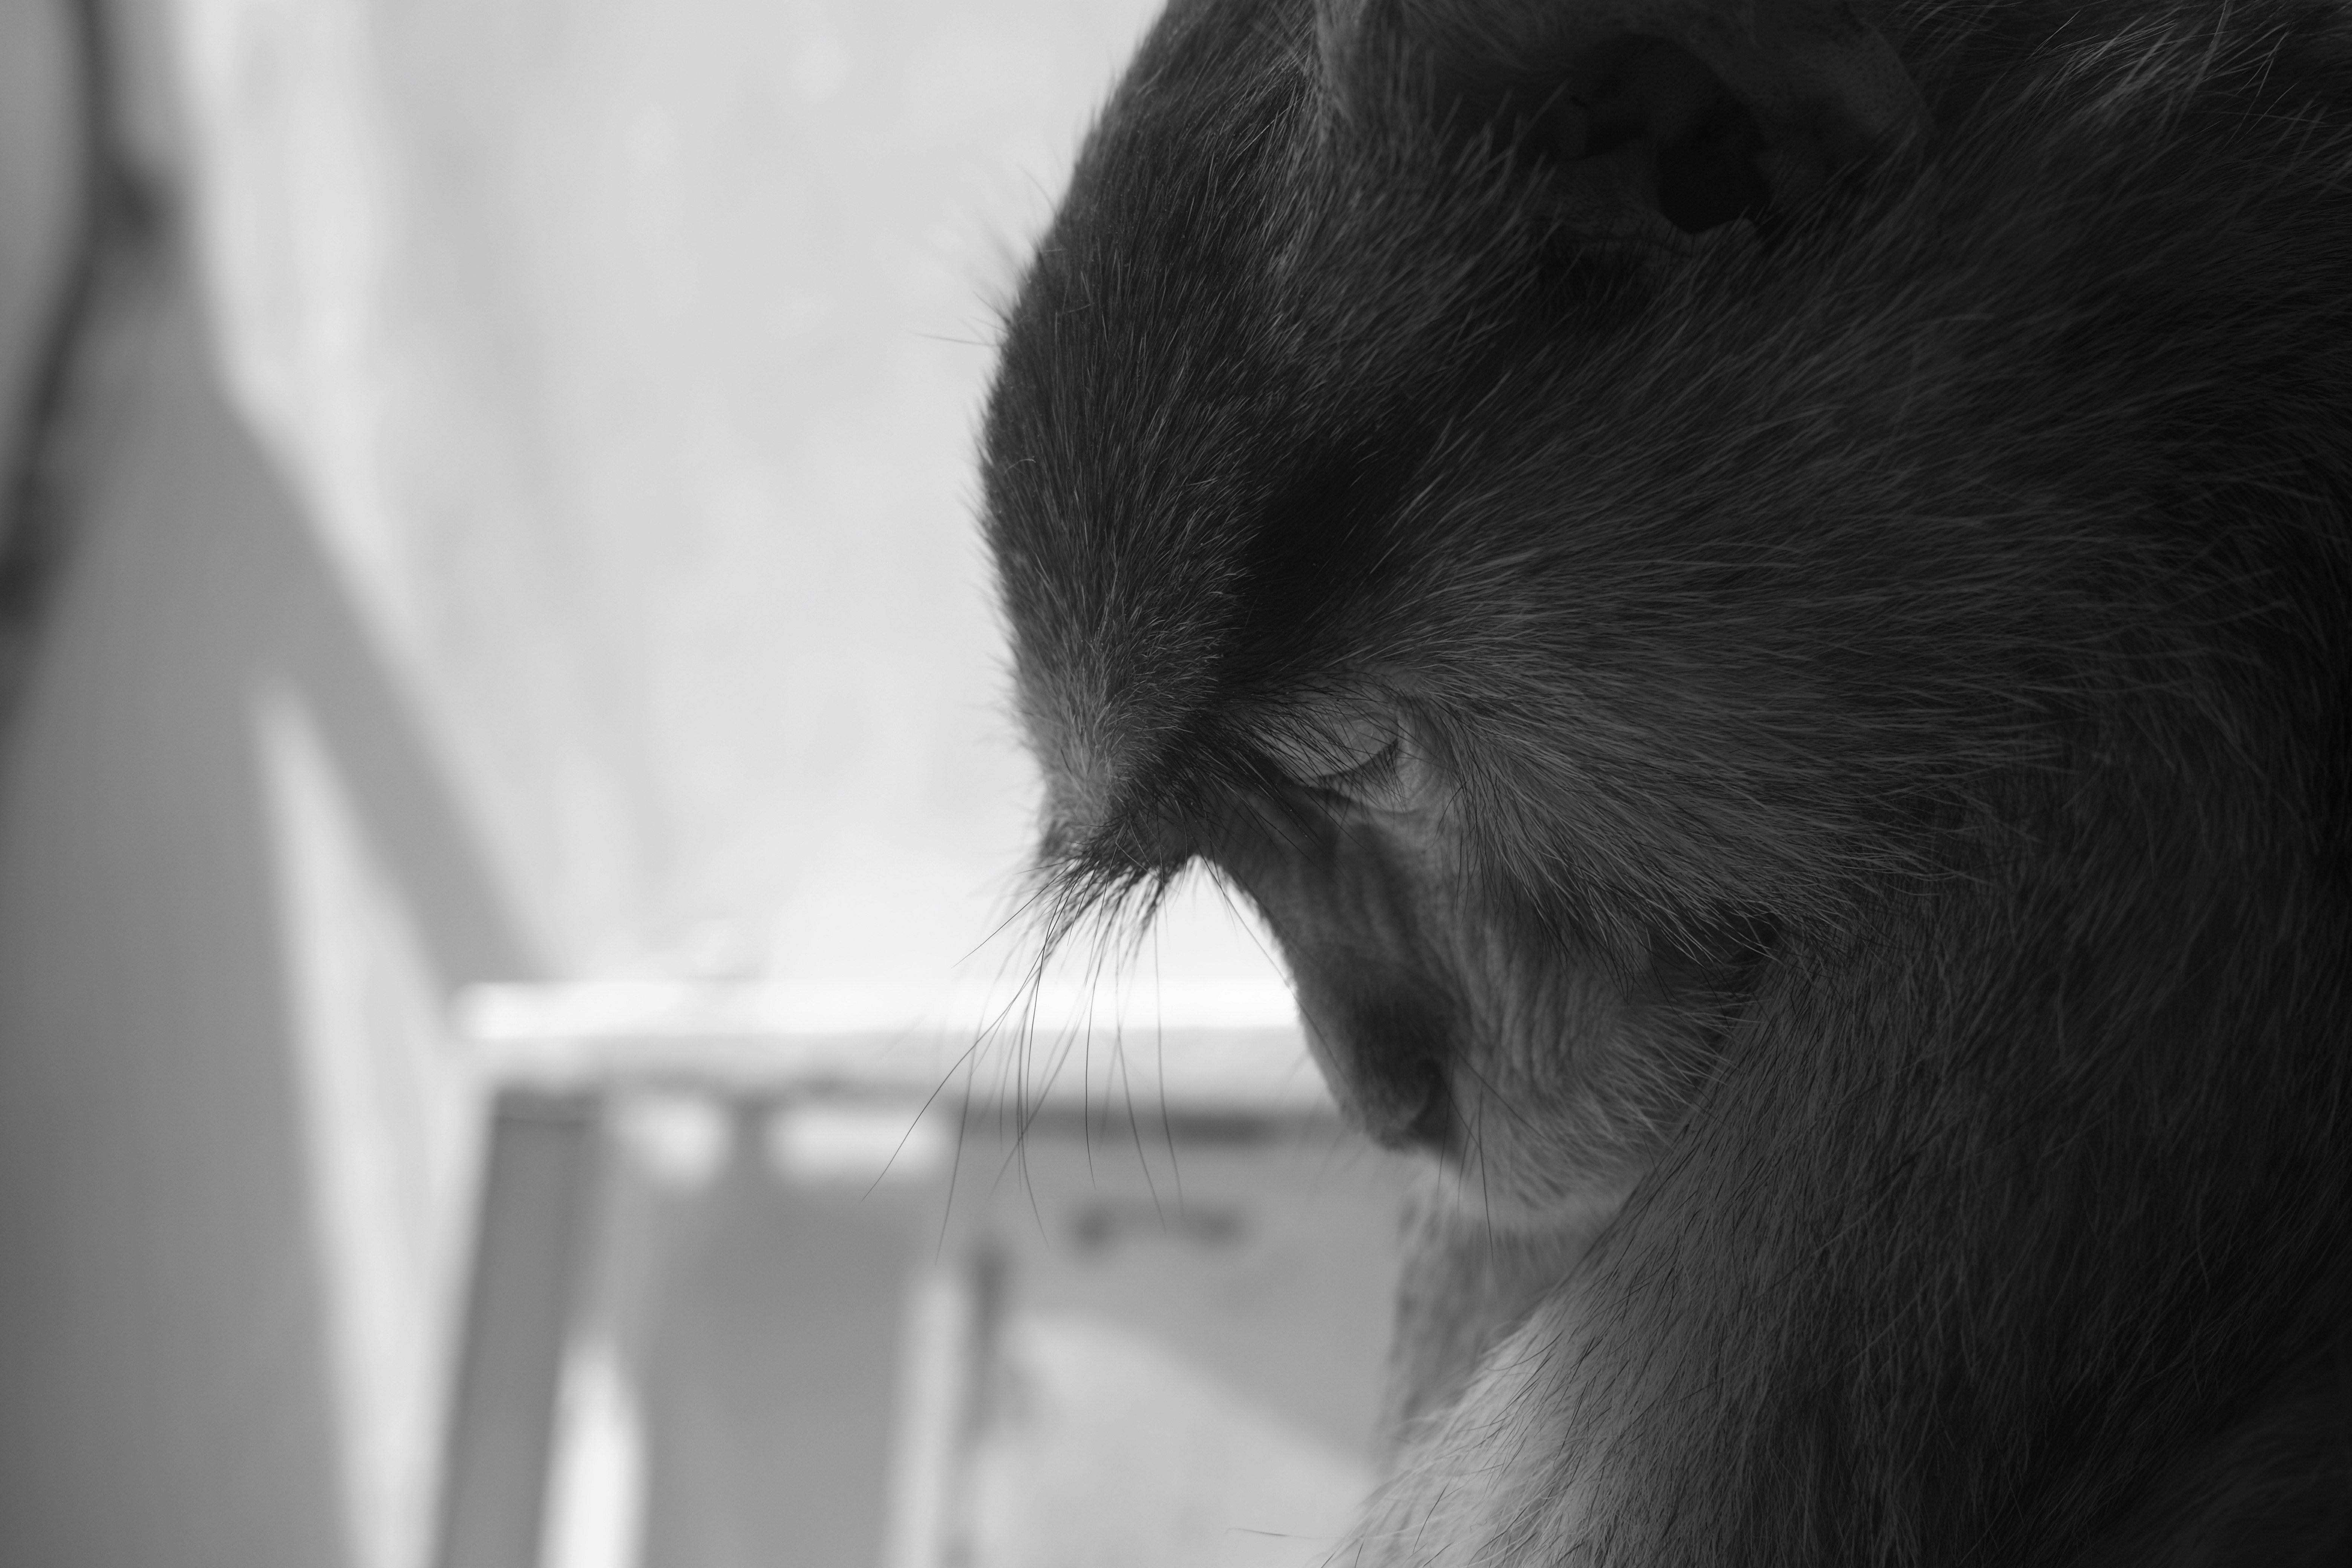 monkey on window in grayscale photography